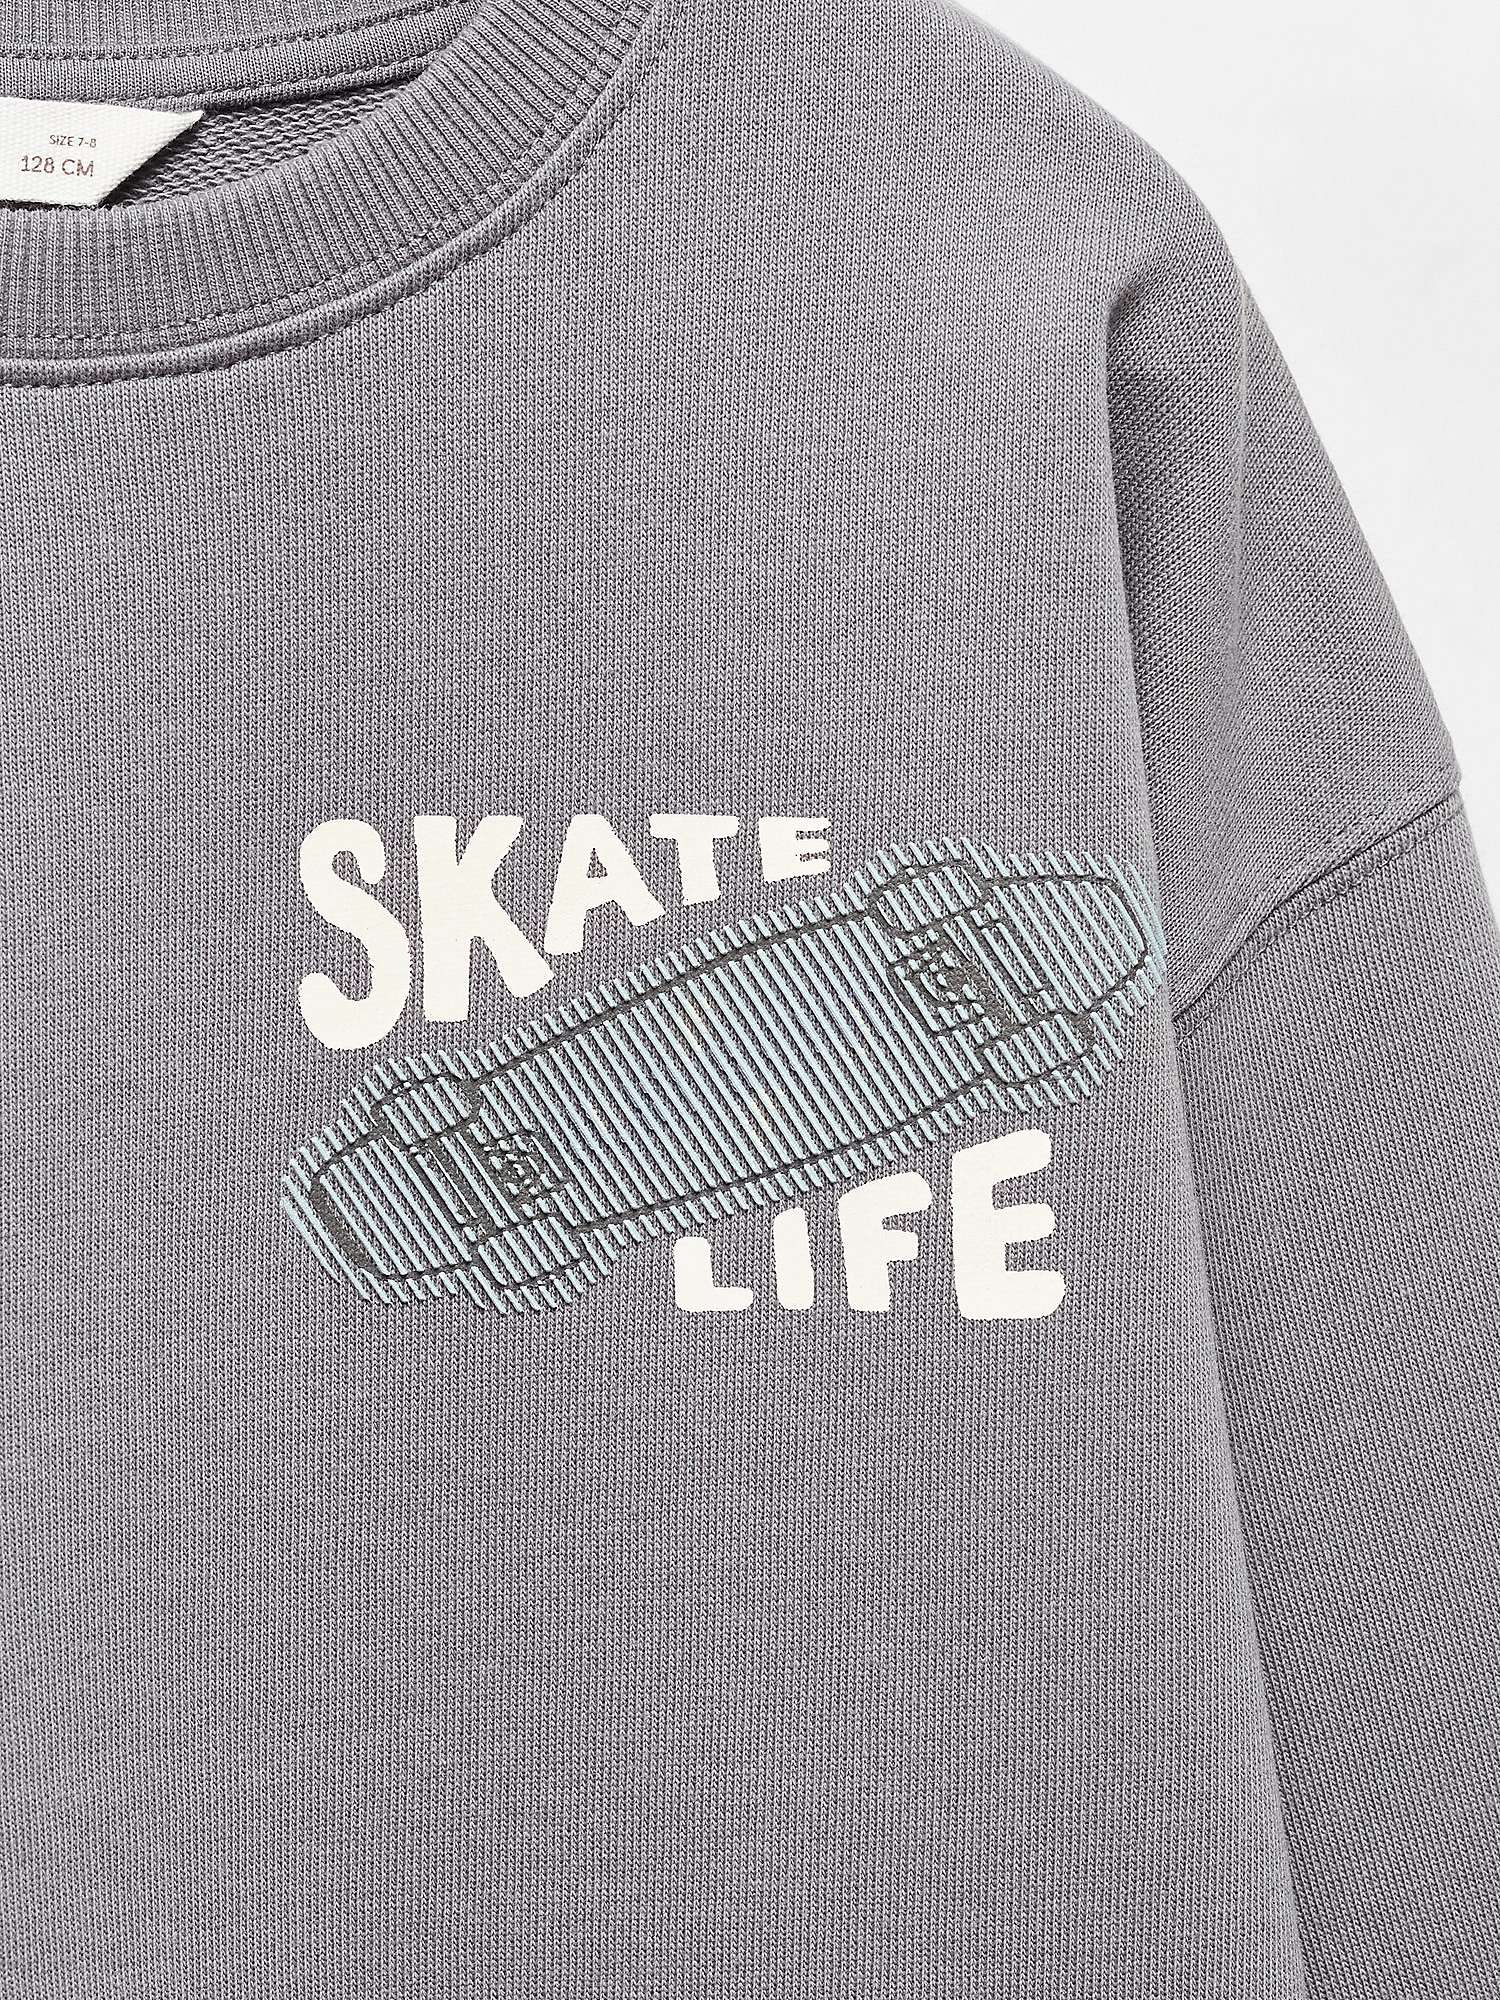 Buy Mango Kids' Skate Life Sweatshirt, Grey Online at johnlewis.com